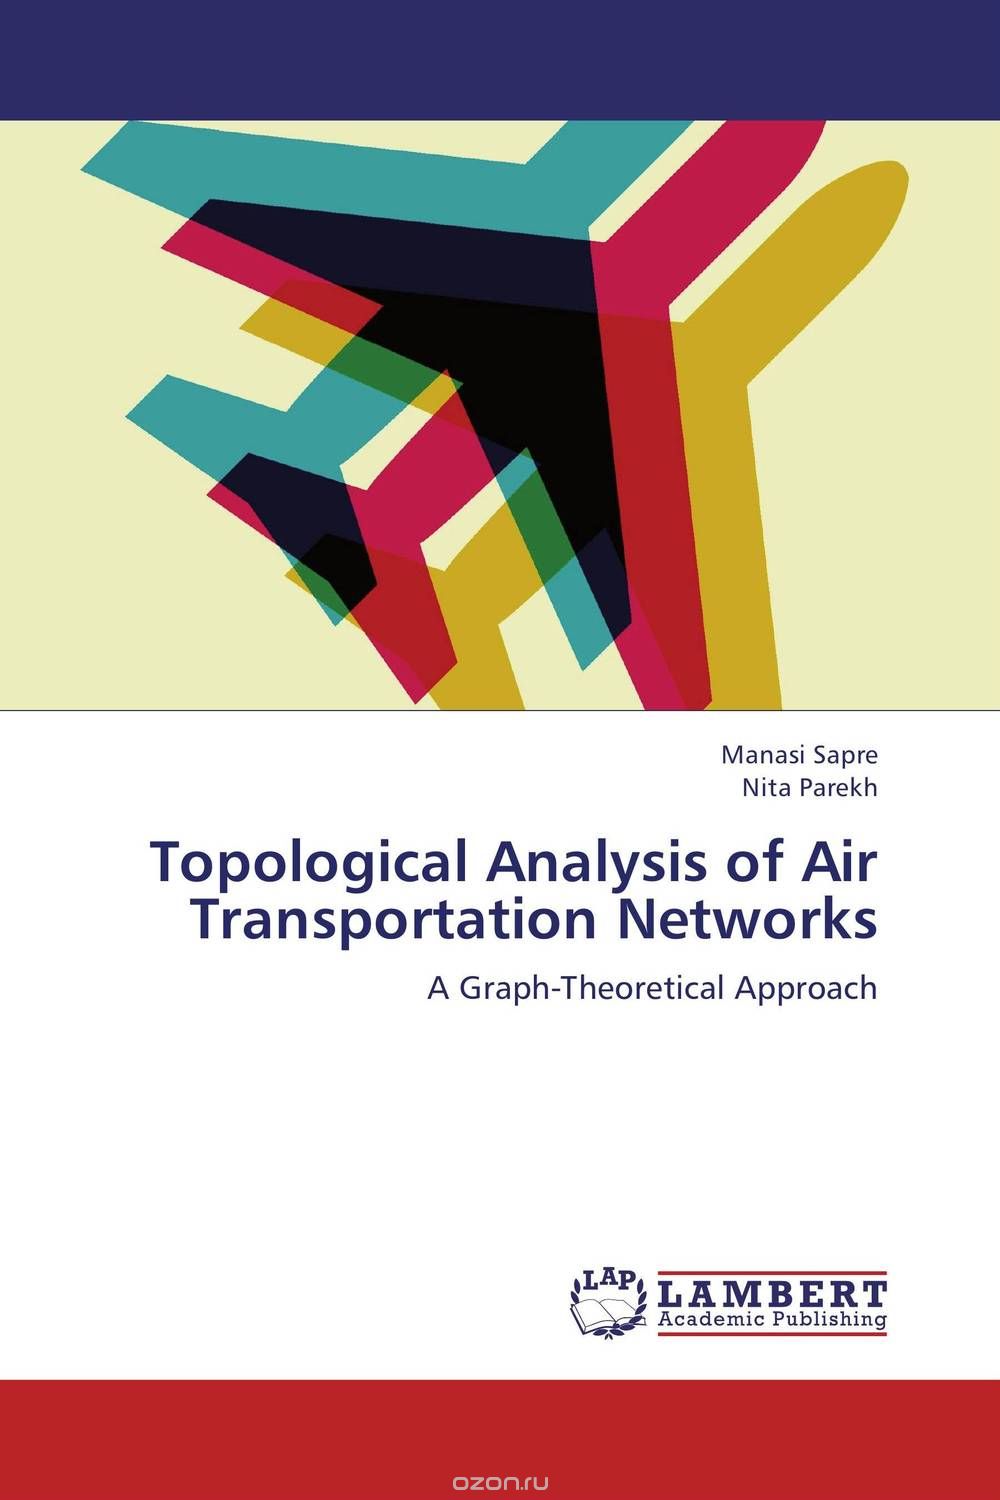 Скачать книгу "Topological Analysis of Air Transportation Networks"